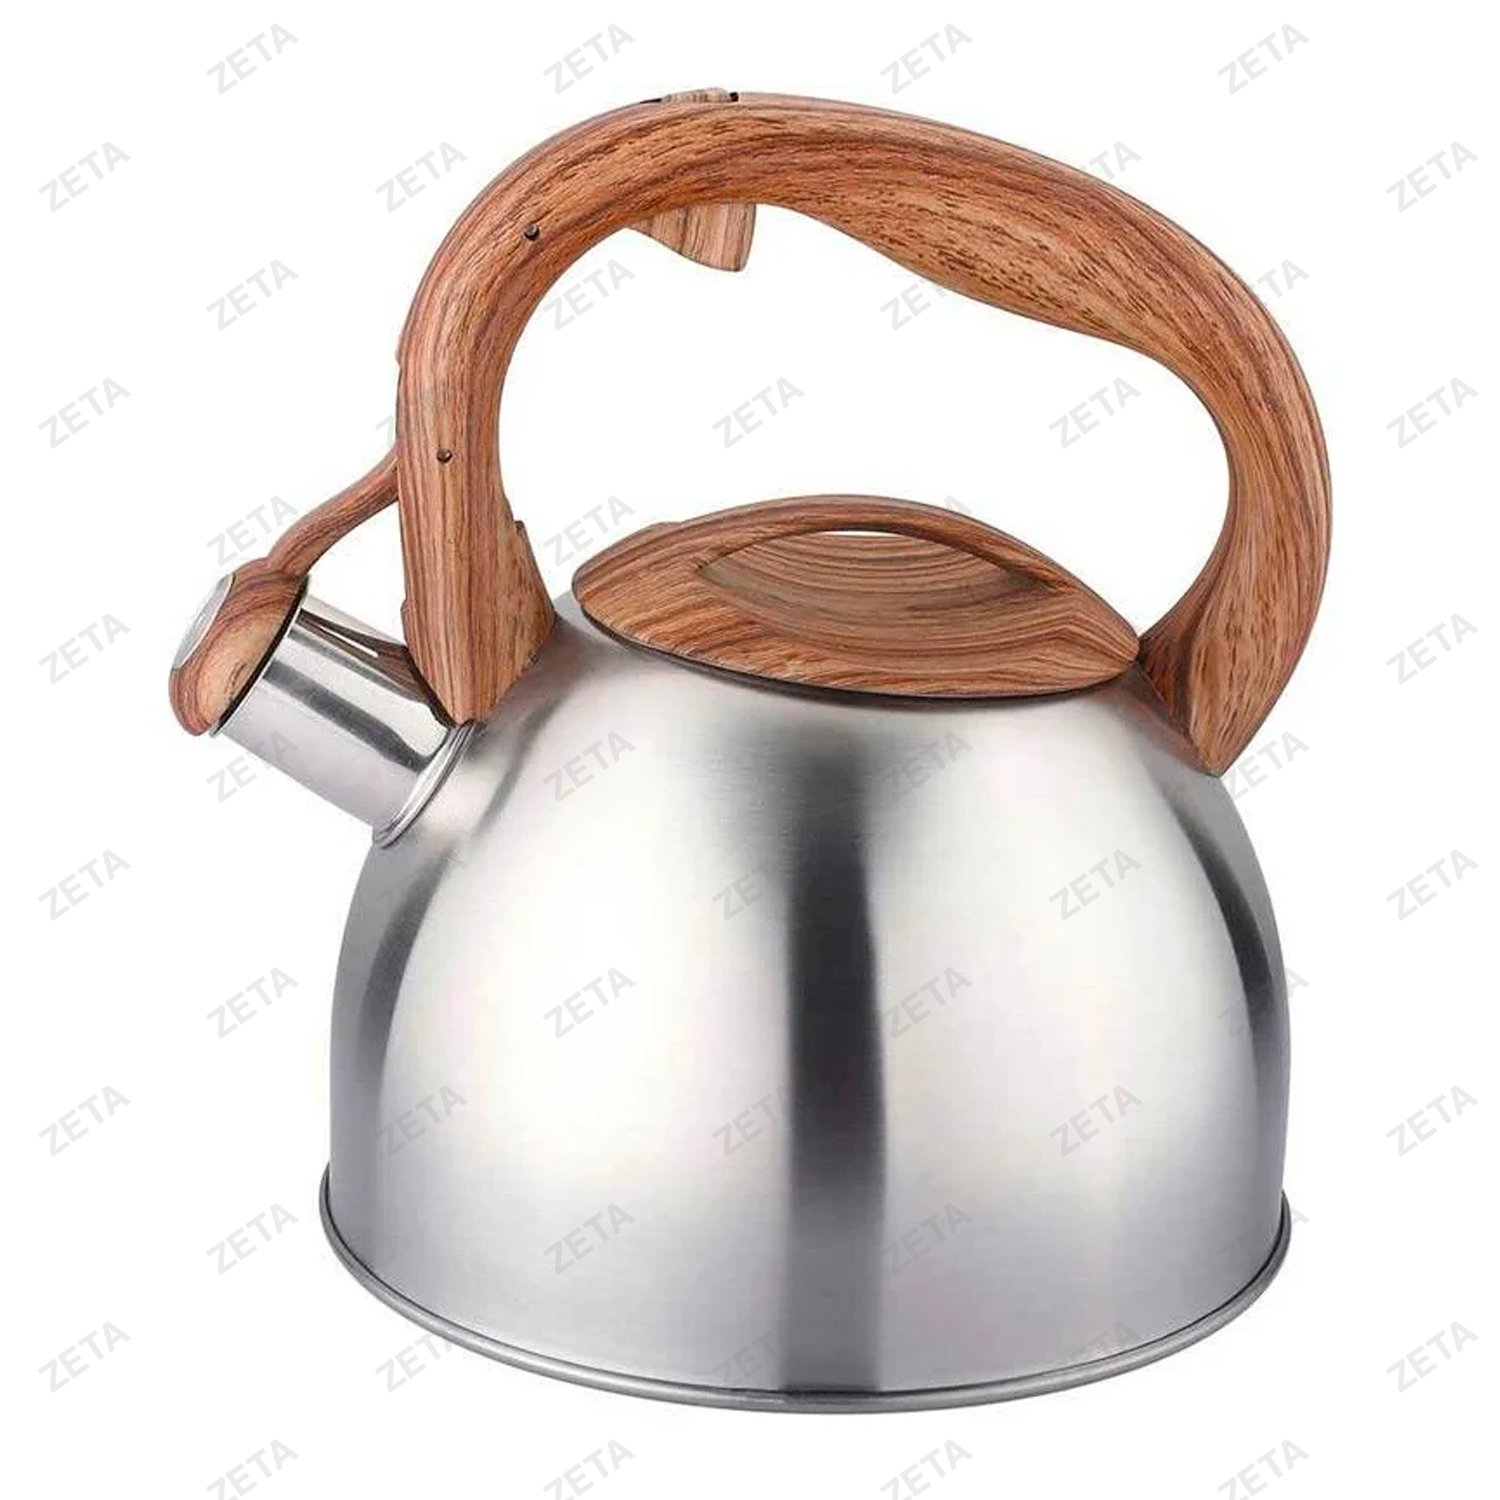 Чайник со свистком LKD-4125BR 2,5 л. серебристый/коричневый Appetite